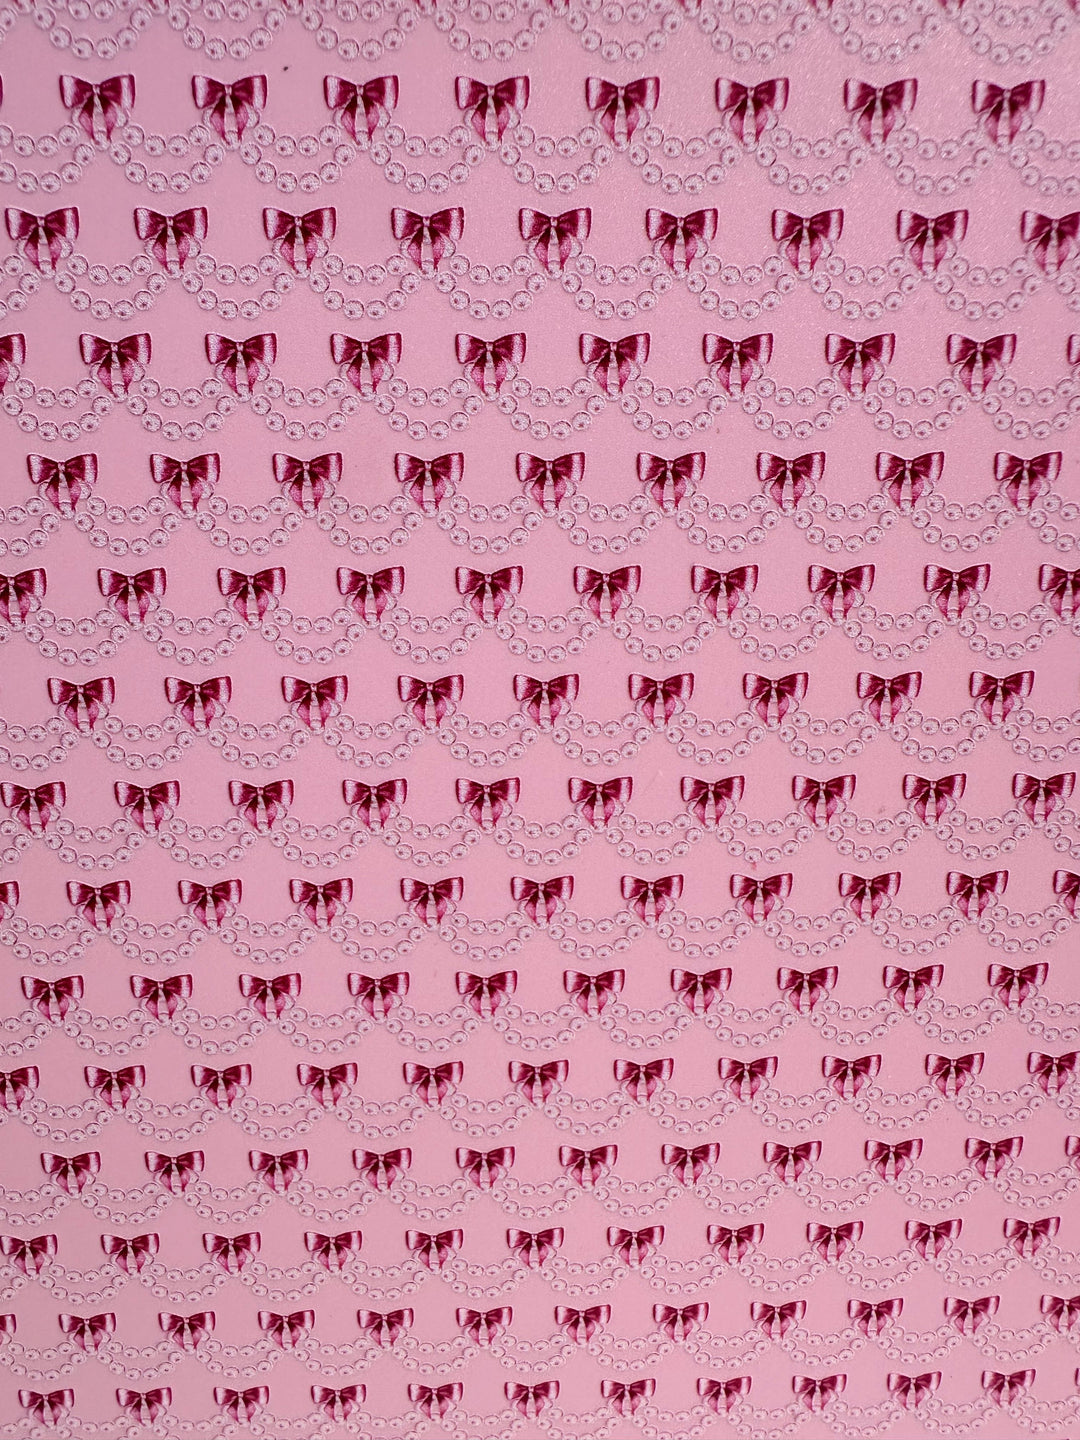 Bows & Pearls on Pastel Pink Pattern Acrylic Sheet CMB PRESTIGE PATTERNS - Acrylic Sheets